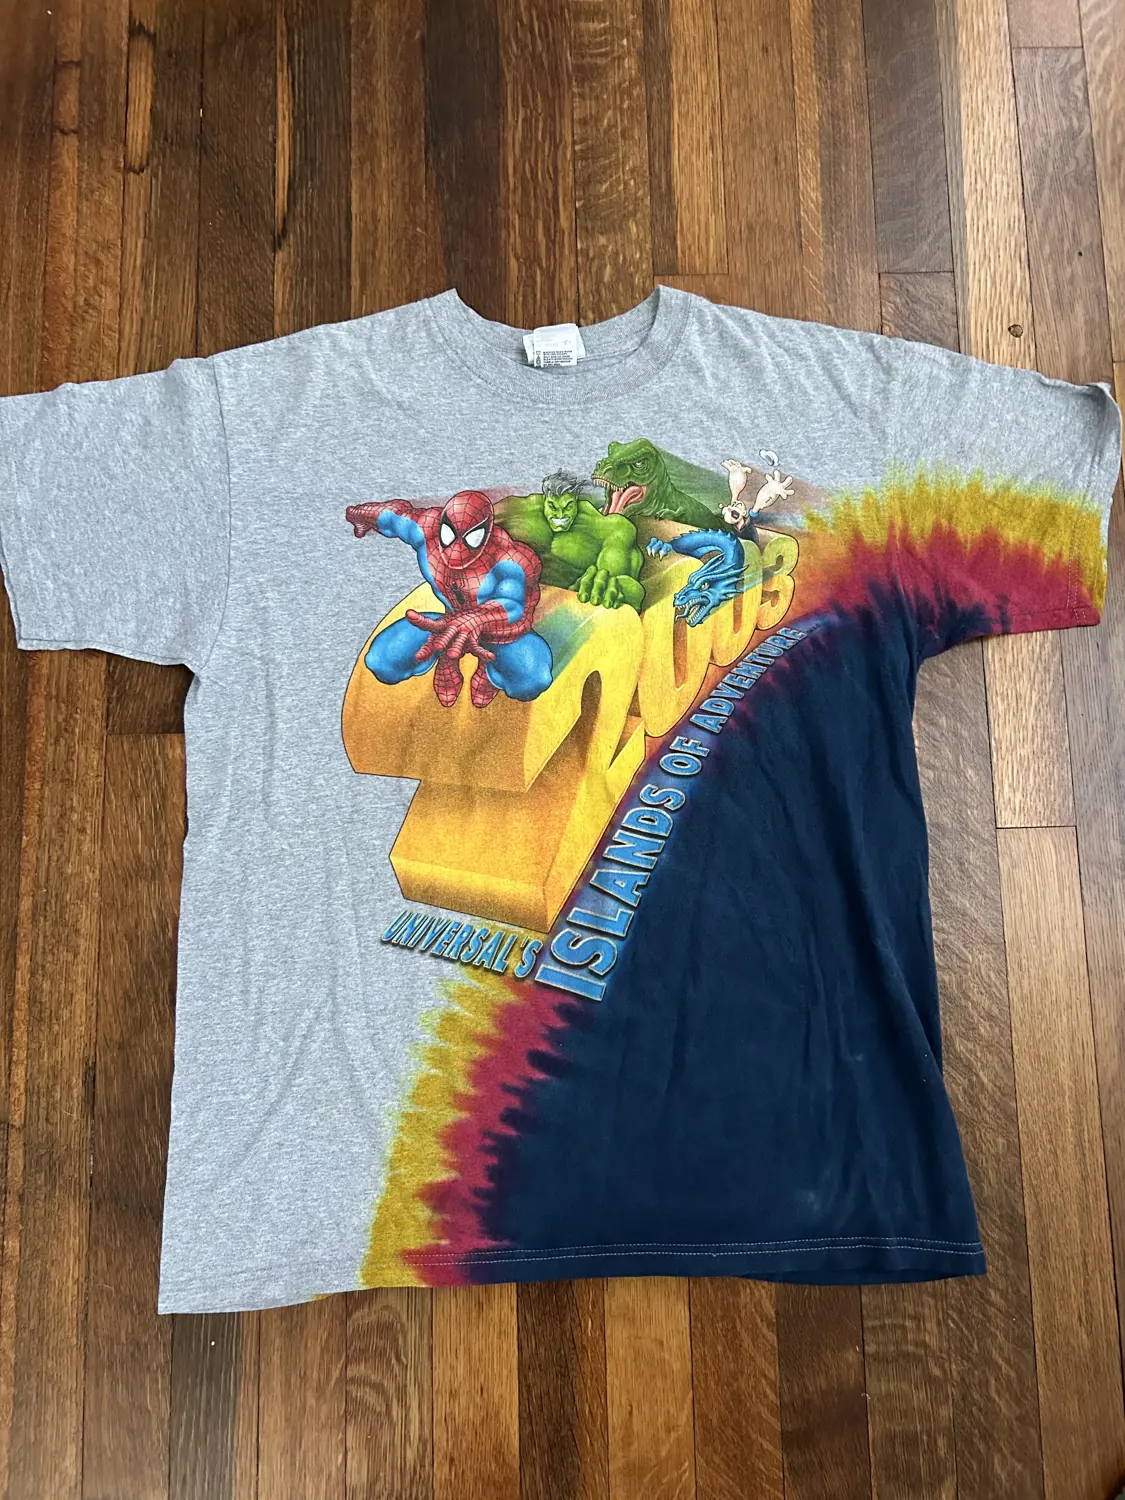 2003 Universal Island of Adventure T-Shirt